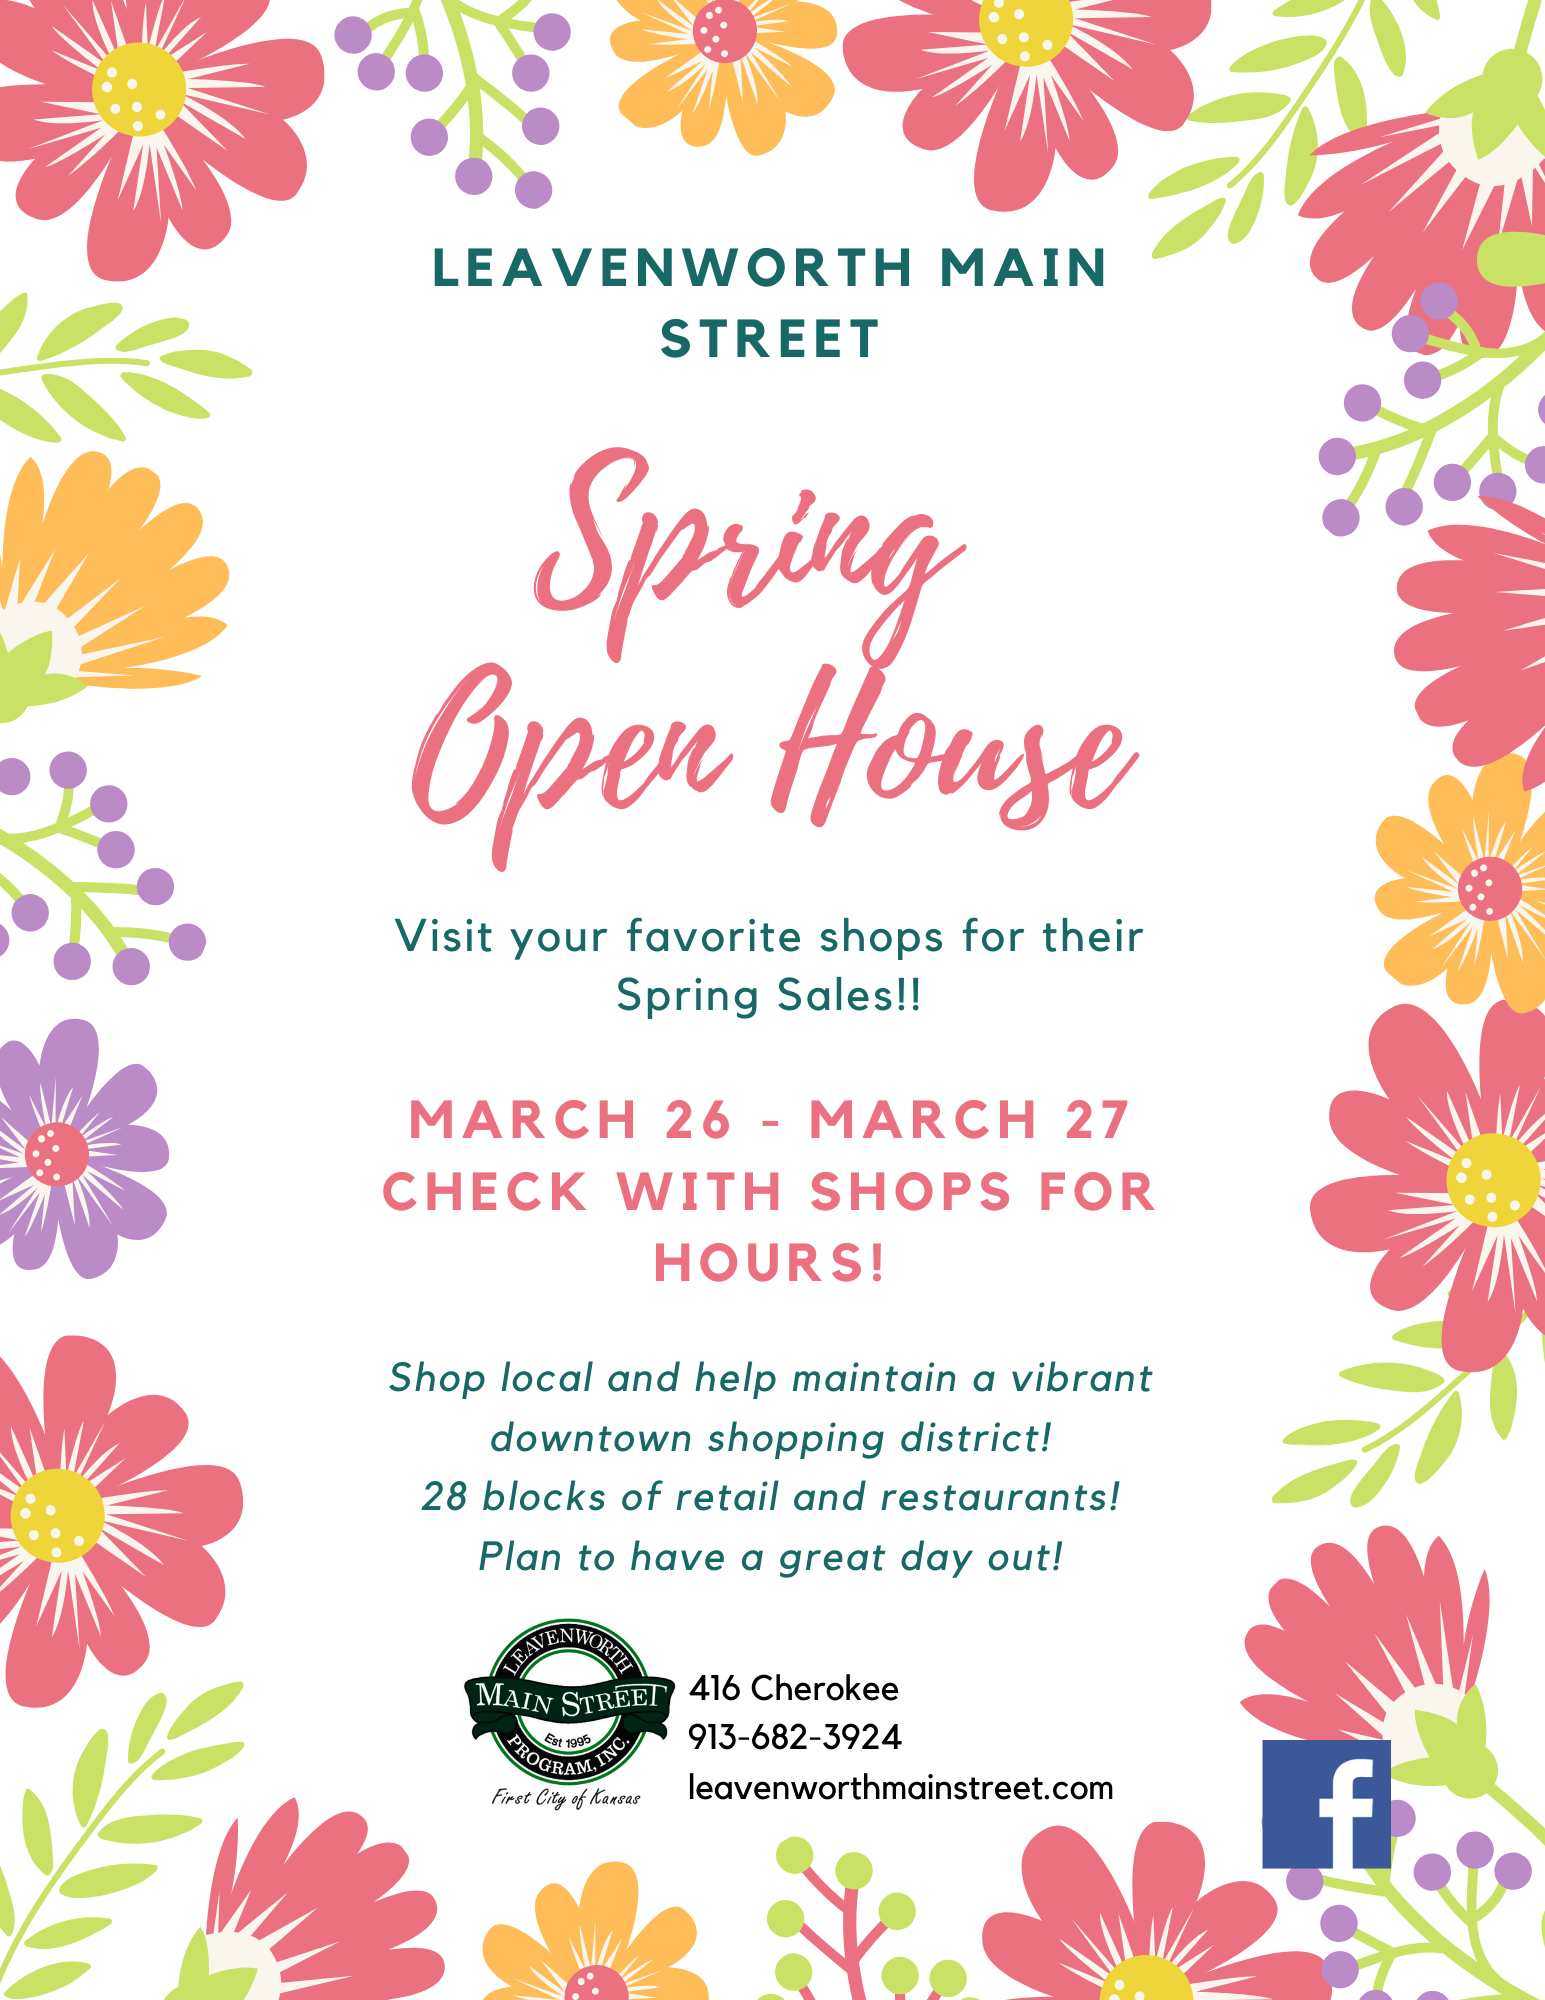 Spring Open House – Leavenworth Main Street